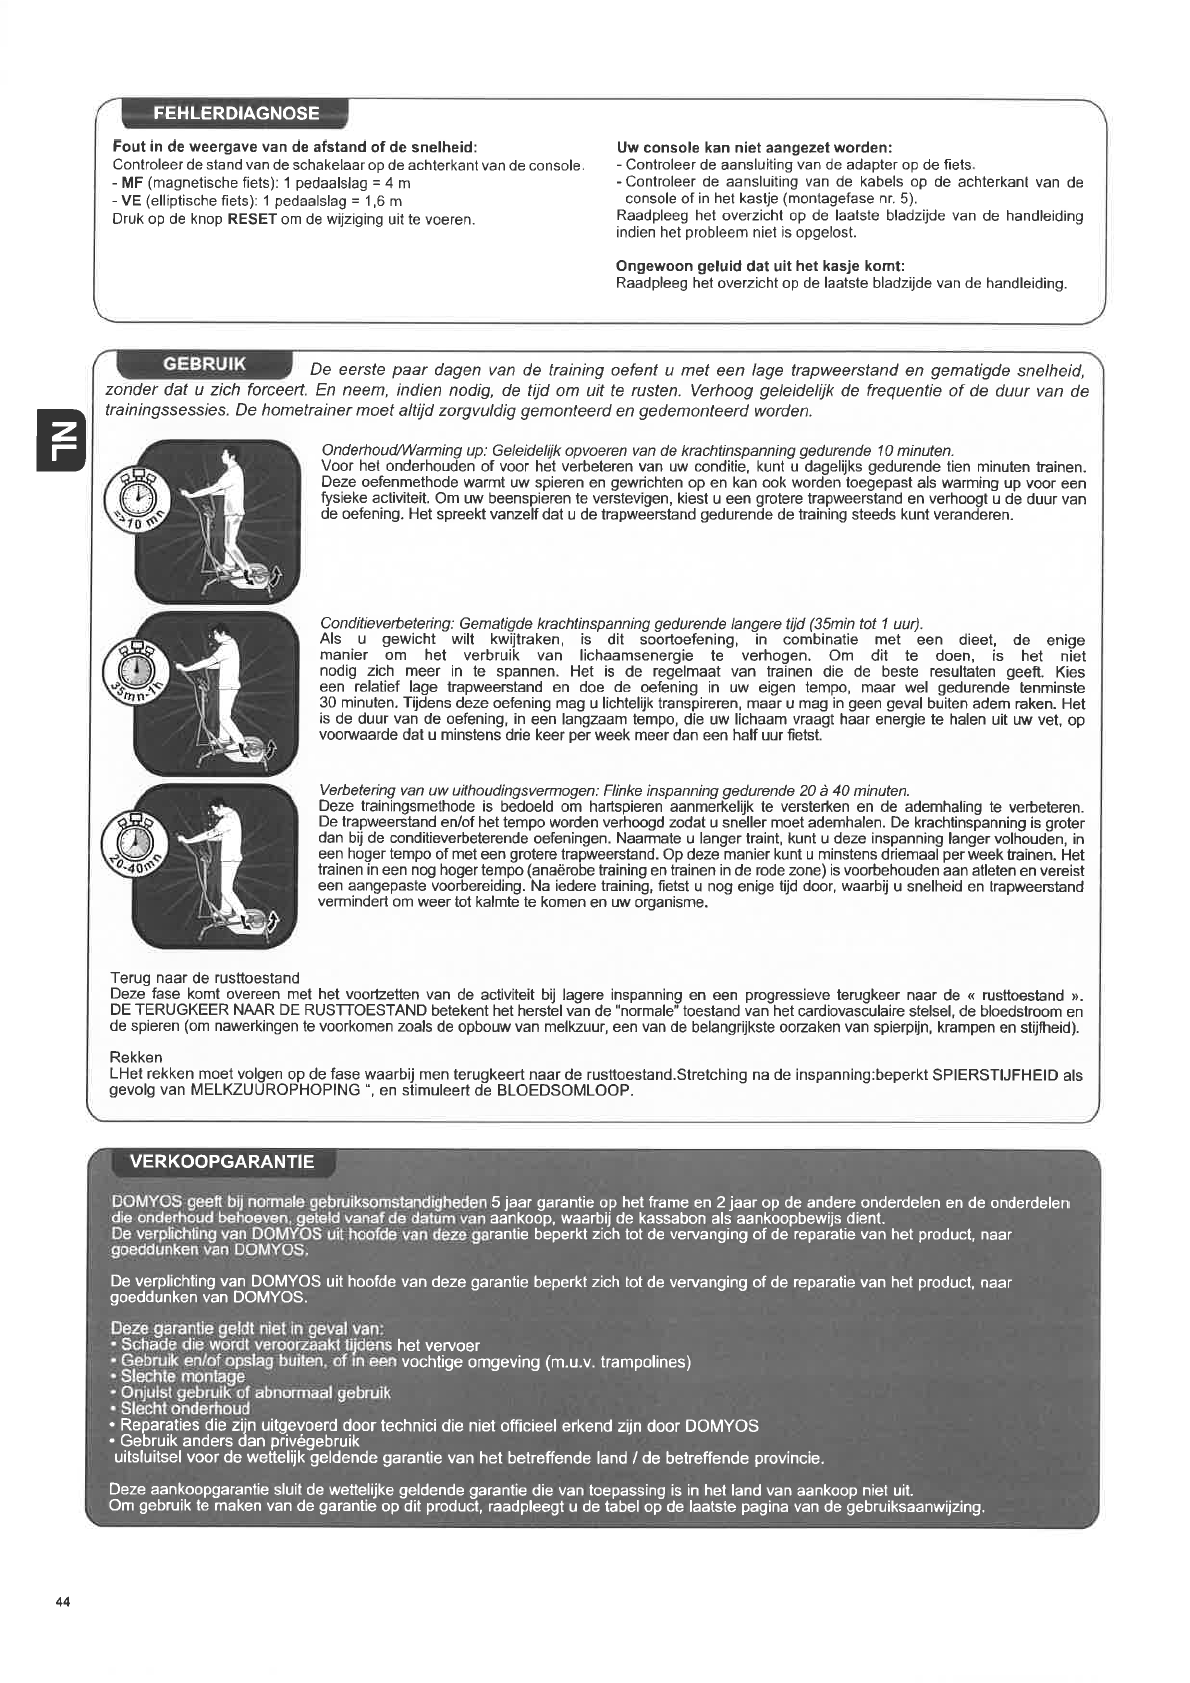 Manual Domyos VE 730 (page of 22) (English, German, Dutch, French, Italian, Polish, Portuguese, Spanish)